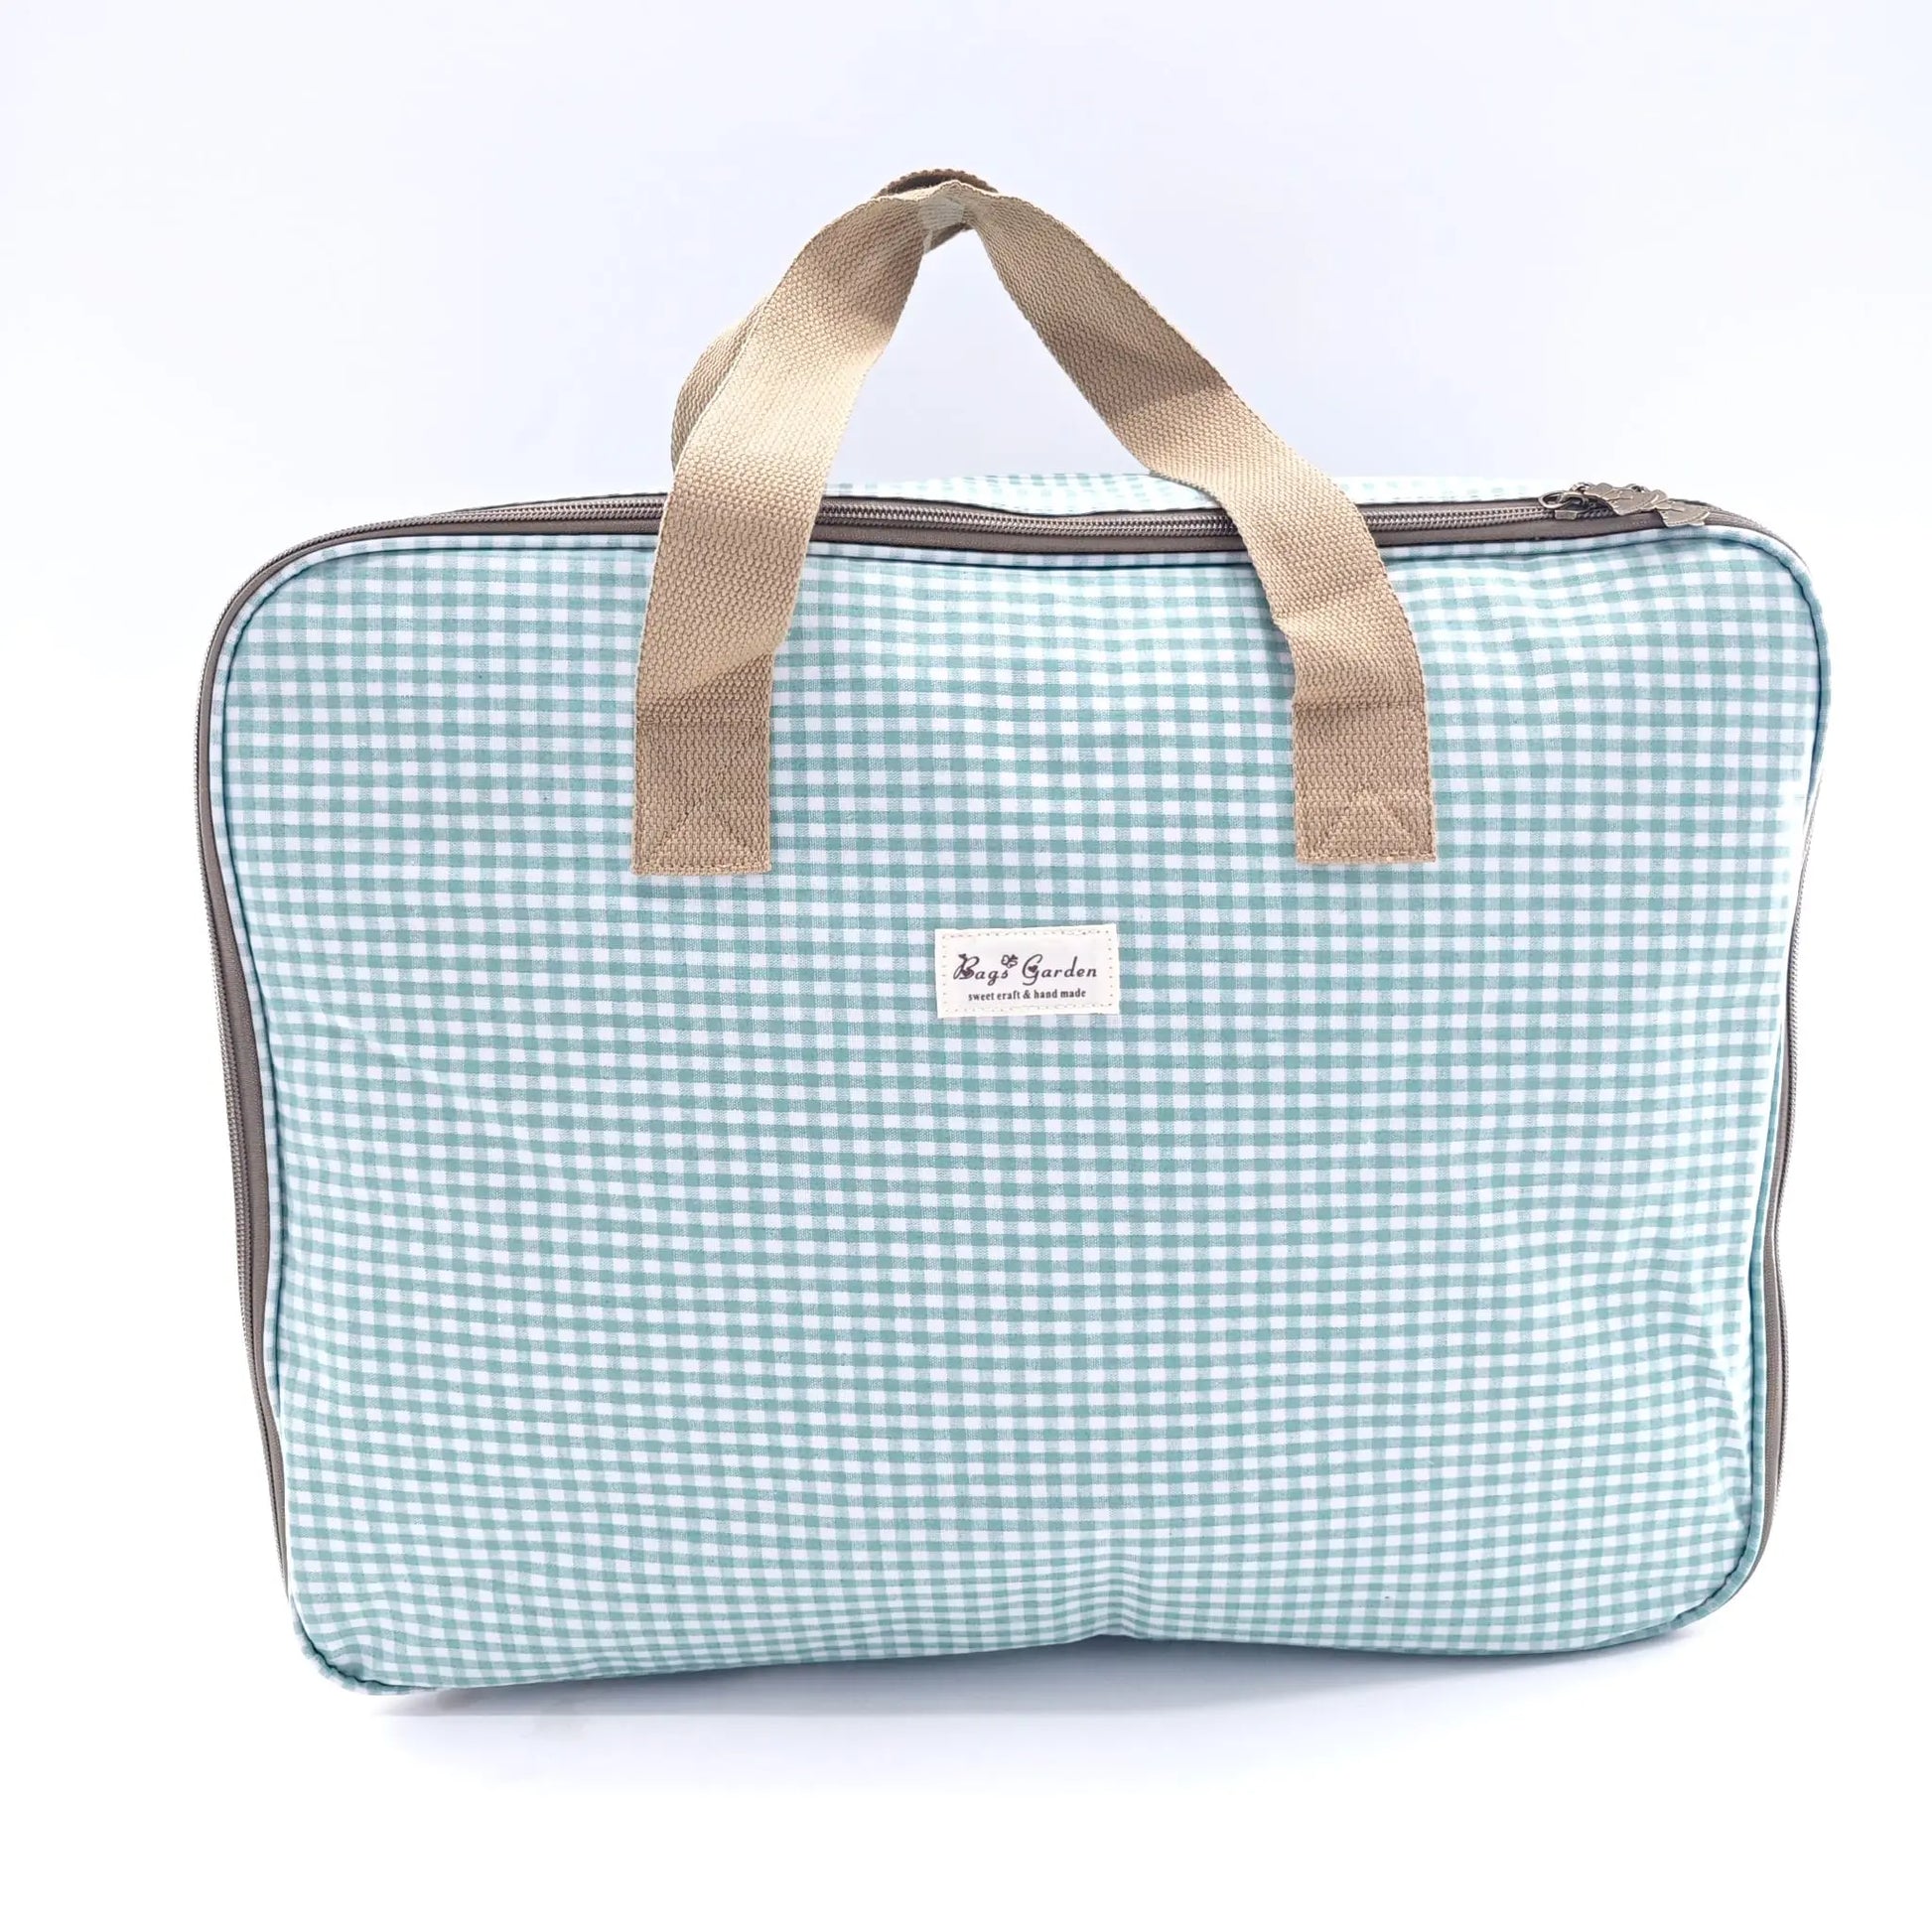 Bags Garden maleta Maleta waterproof Vichy Mint Bags Garden Maternidad Bags Garden